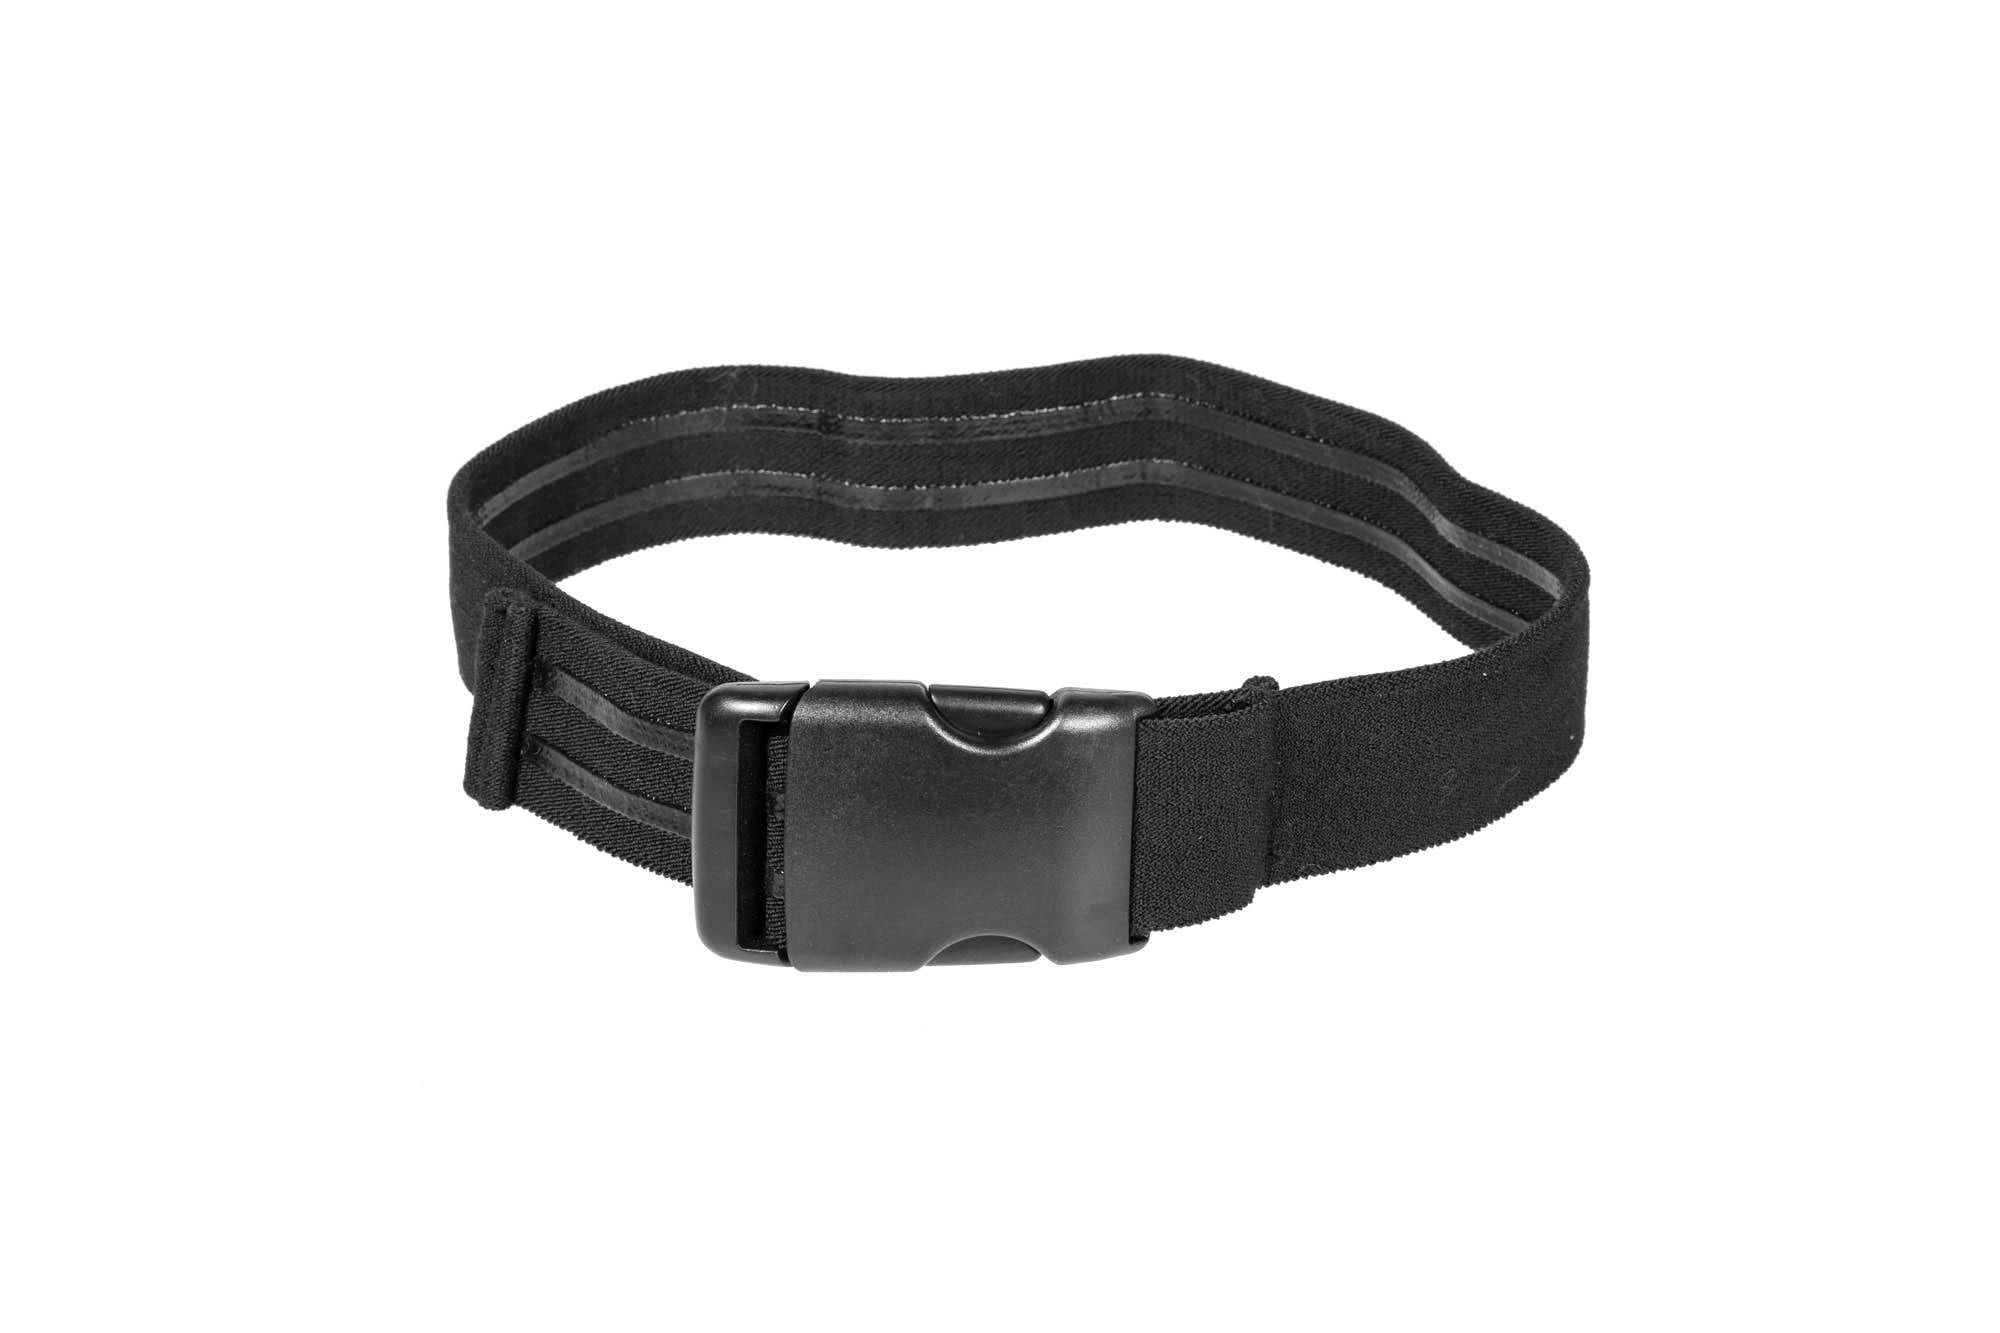 Anti-slip belt for drop leg holsters - black